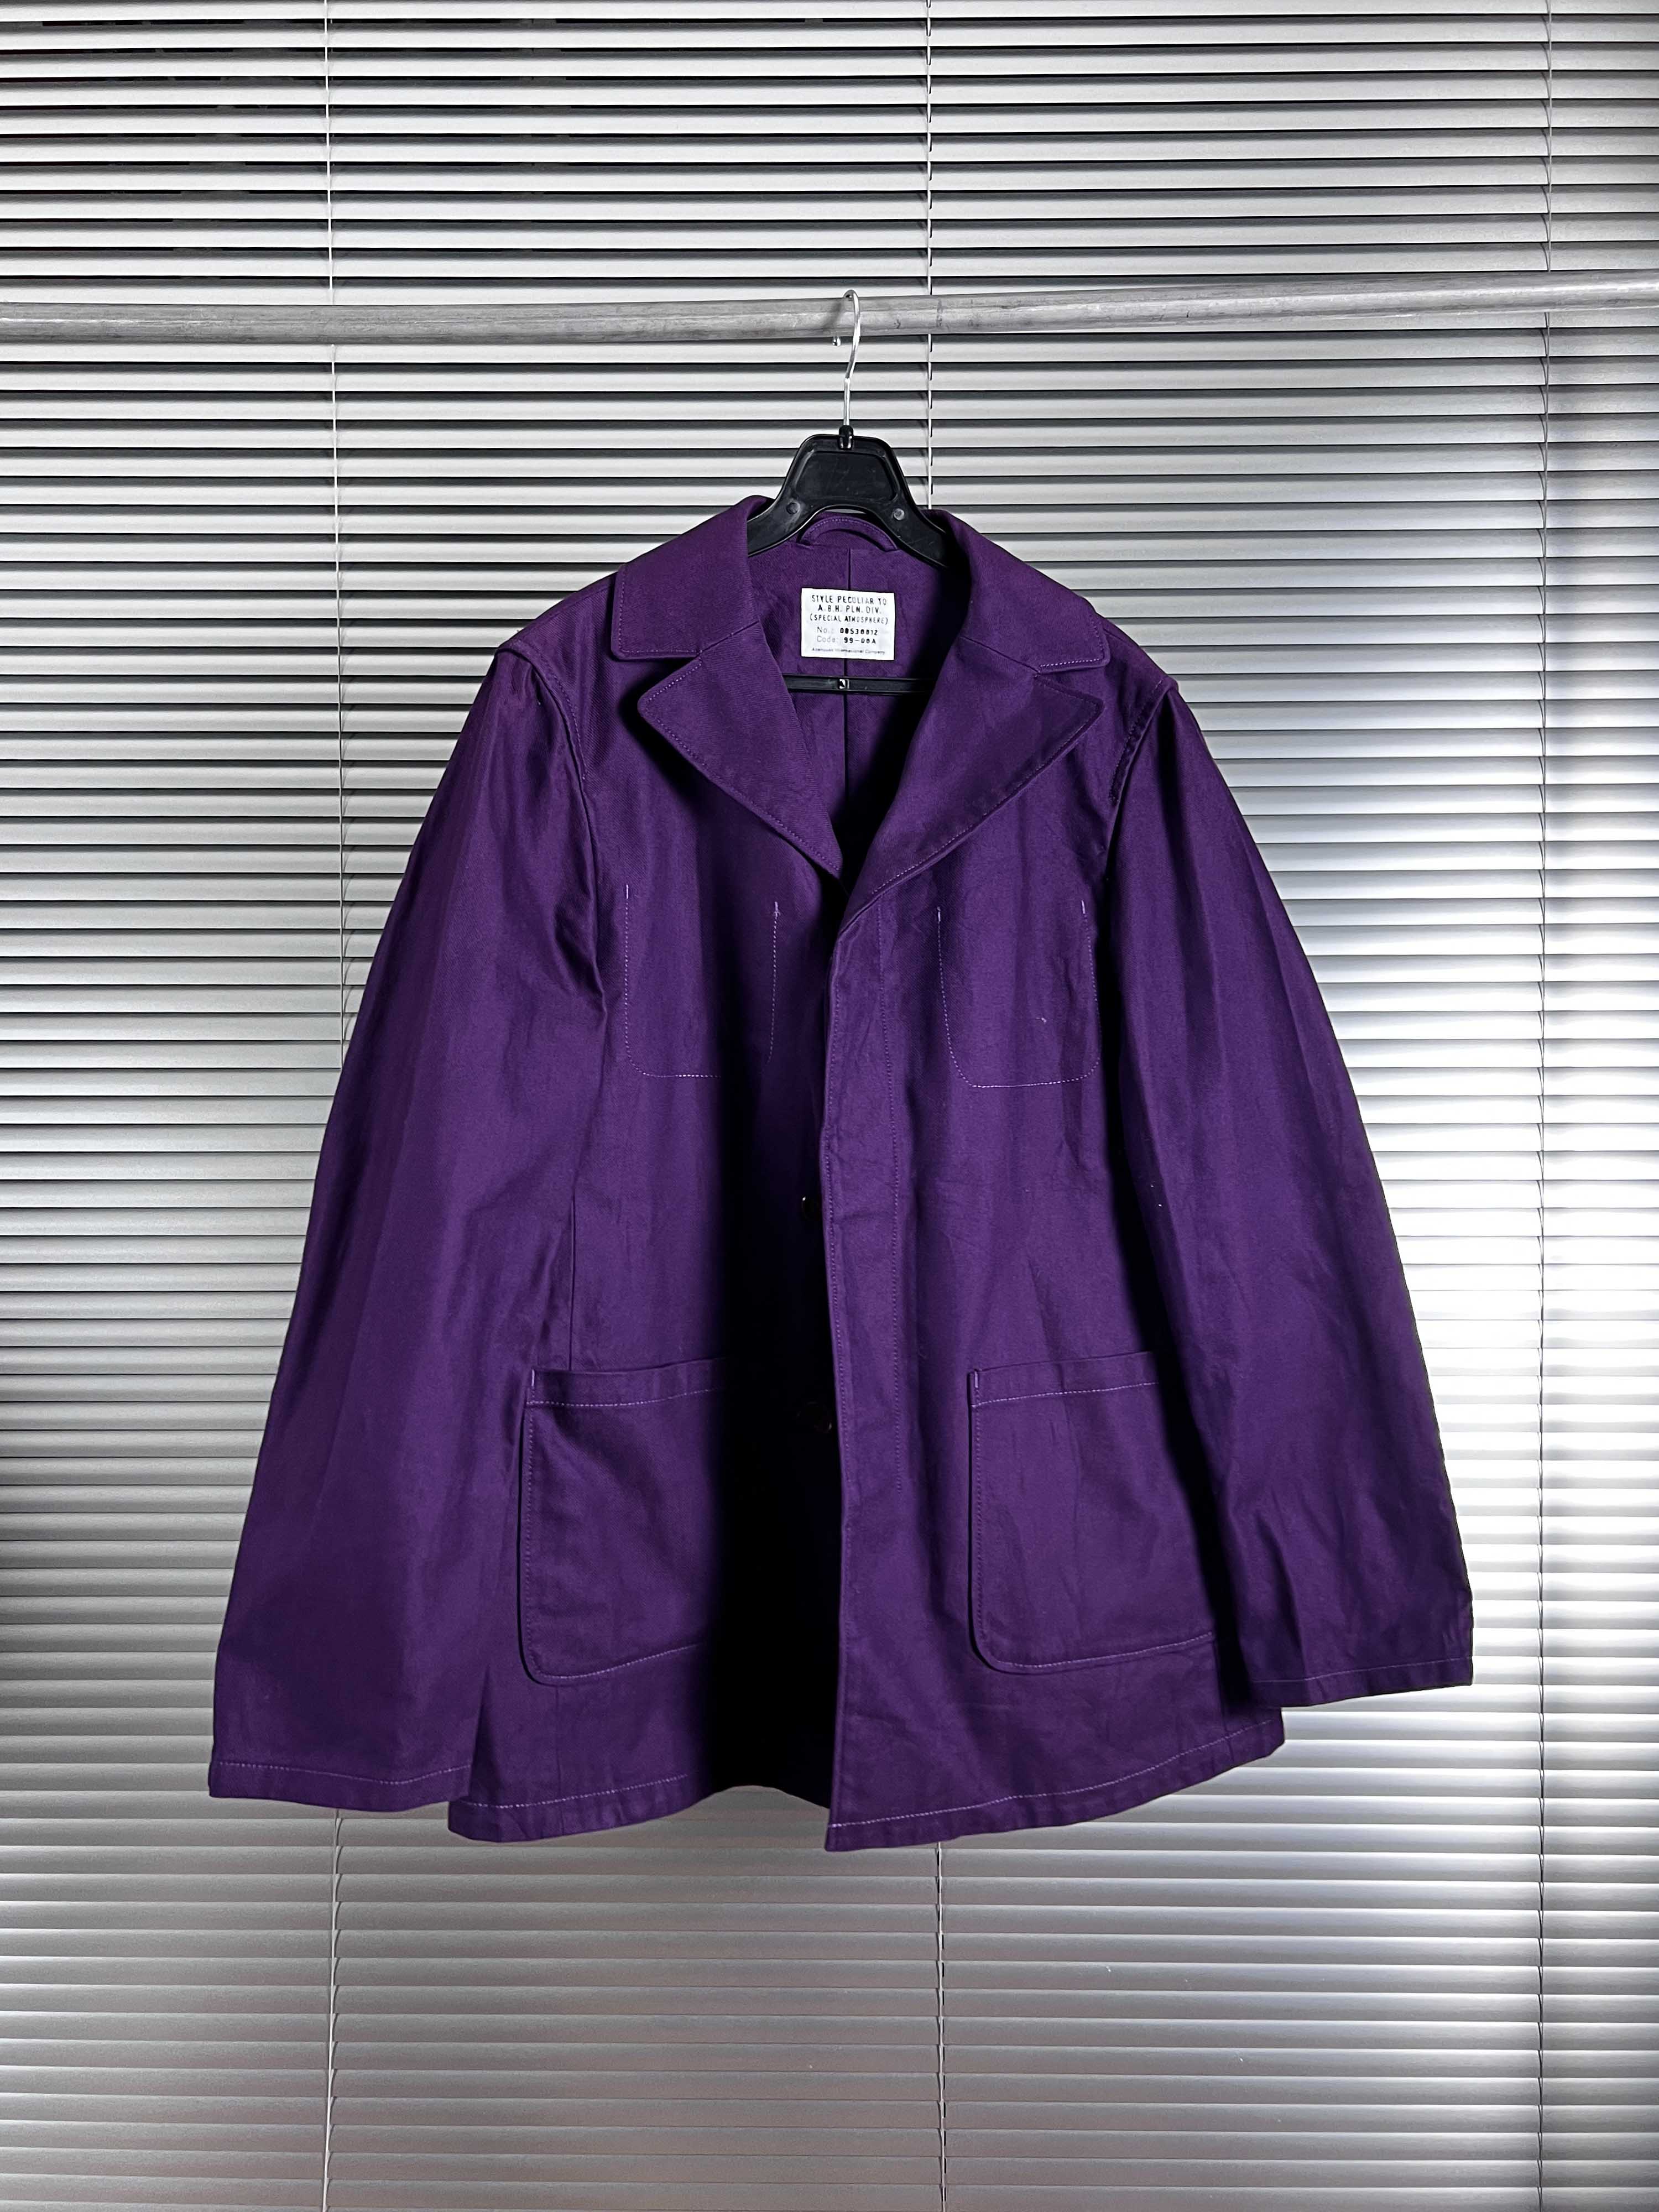 ABA HOUSE purple cotton jacket